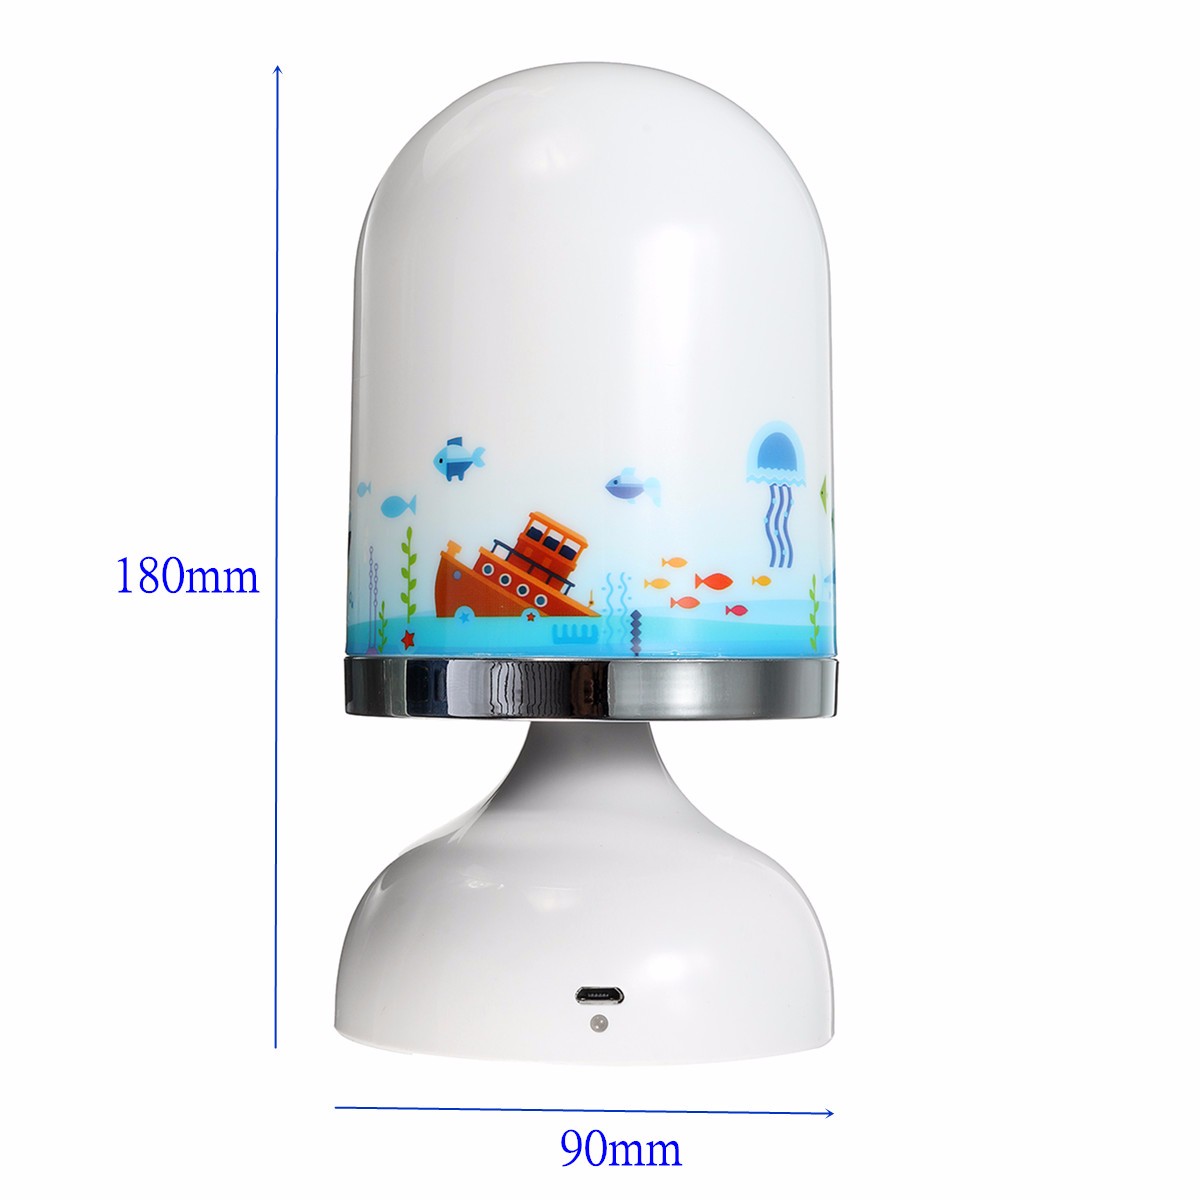 Portable-USB-Rechargeable-LED-Night-Light-Hanging-Stand-Table-Vibration-Sensor-Lamp-1085102-7